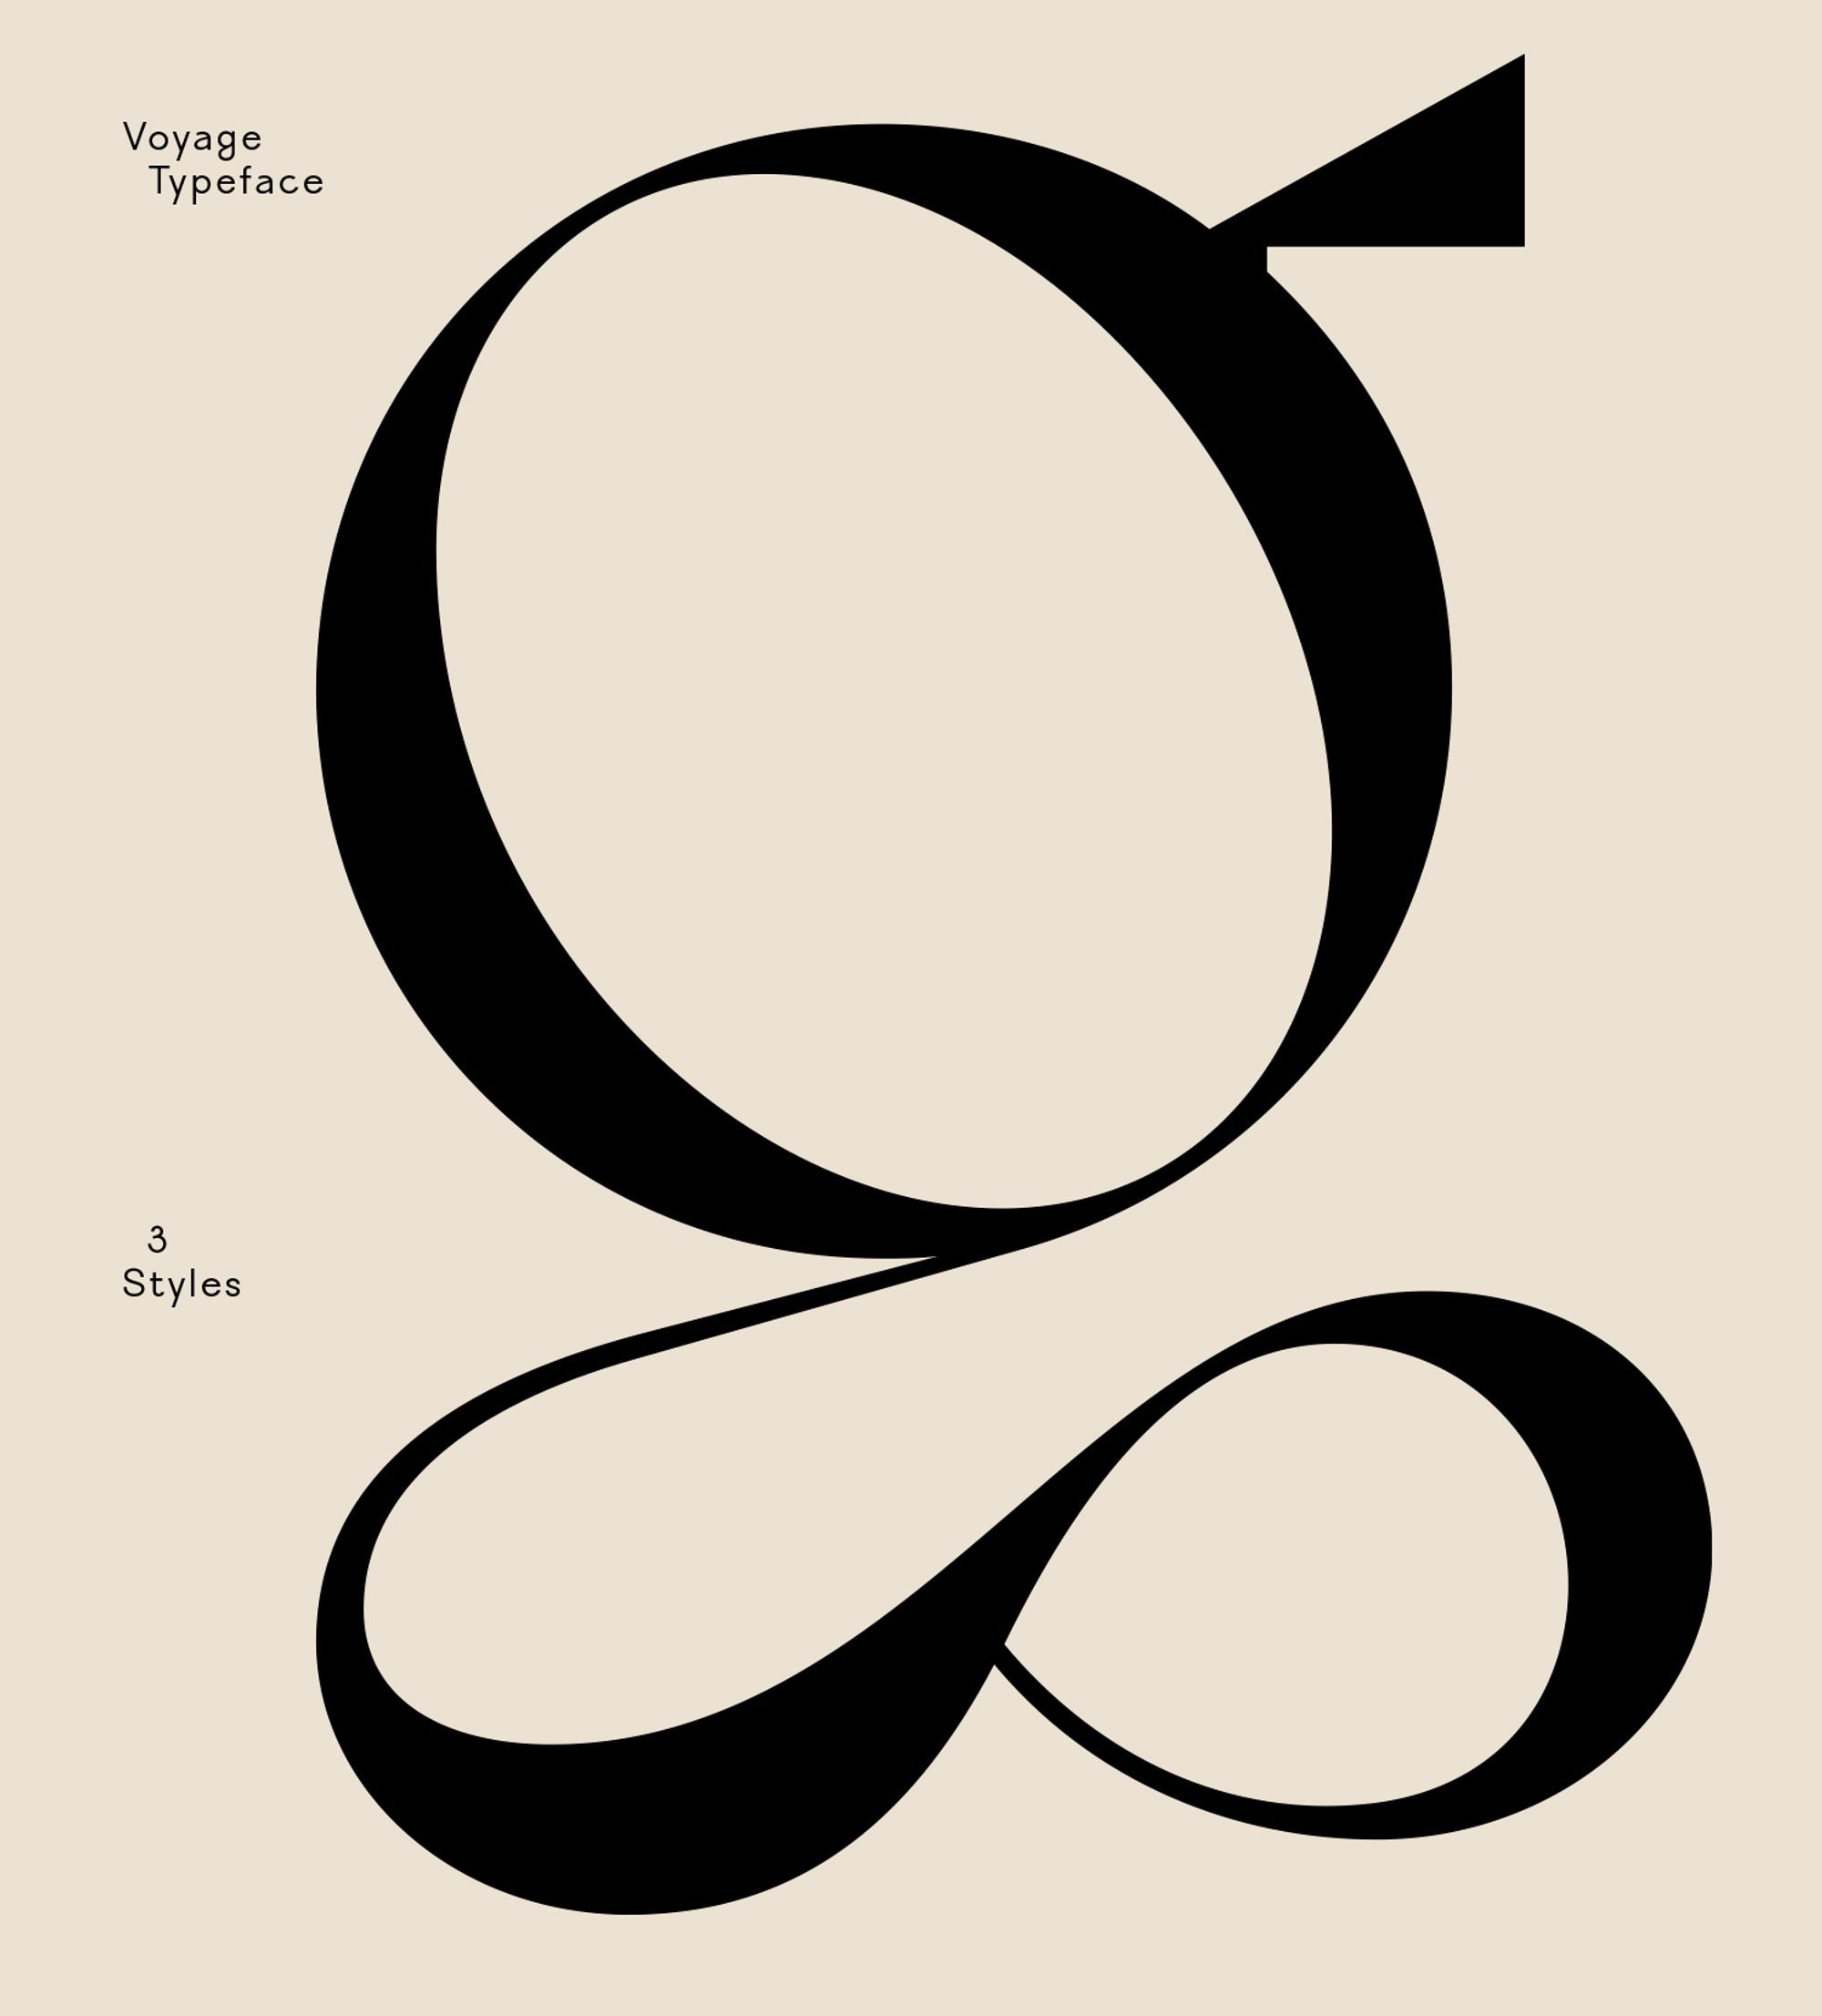 Voyage Typeface